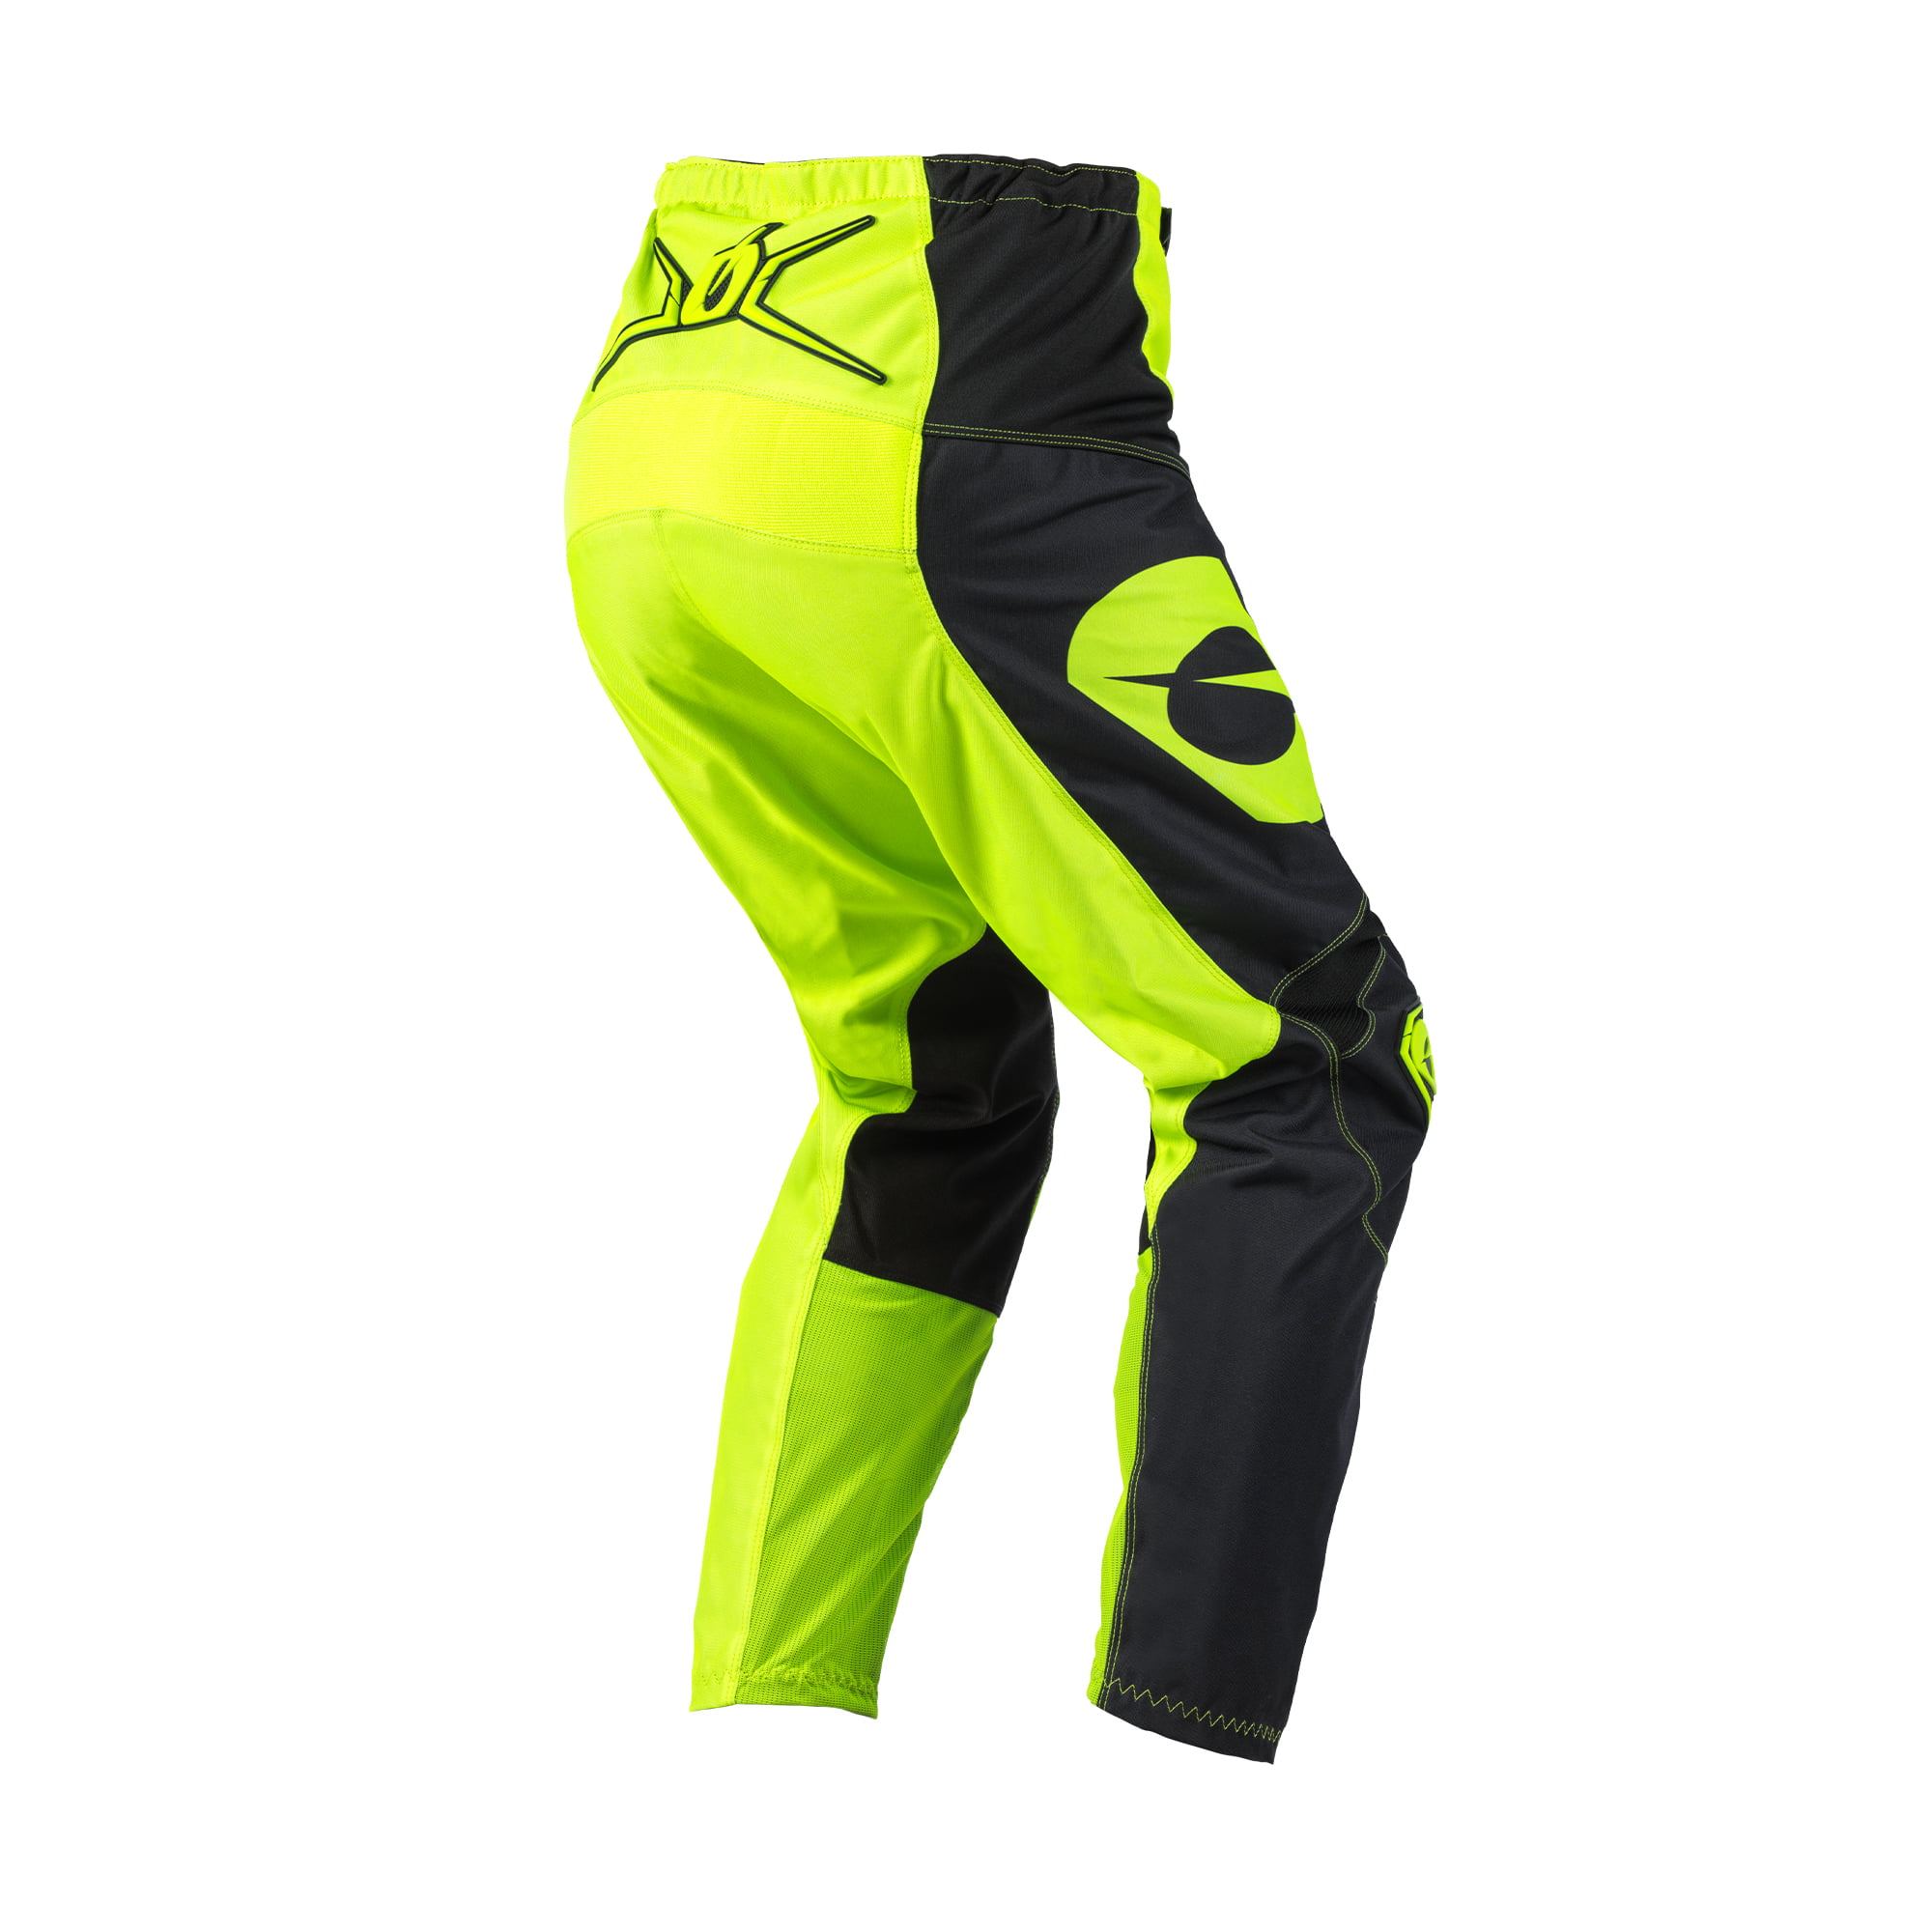 Jersey Adult Small/Pants W28 Oneal Element Racewear Black/Neon Motocross Dirt bike Offroad MX Jersey Pants Combo Package Riding Gear Set 